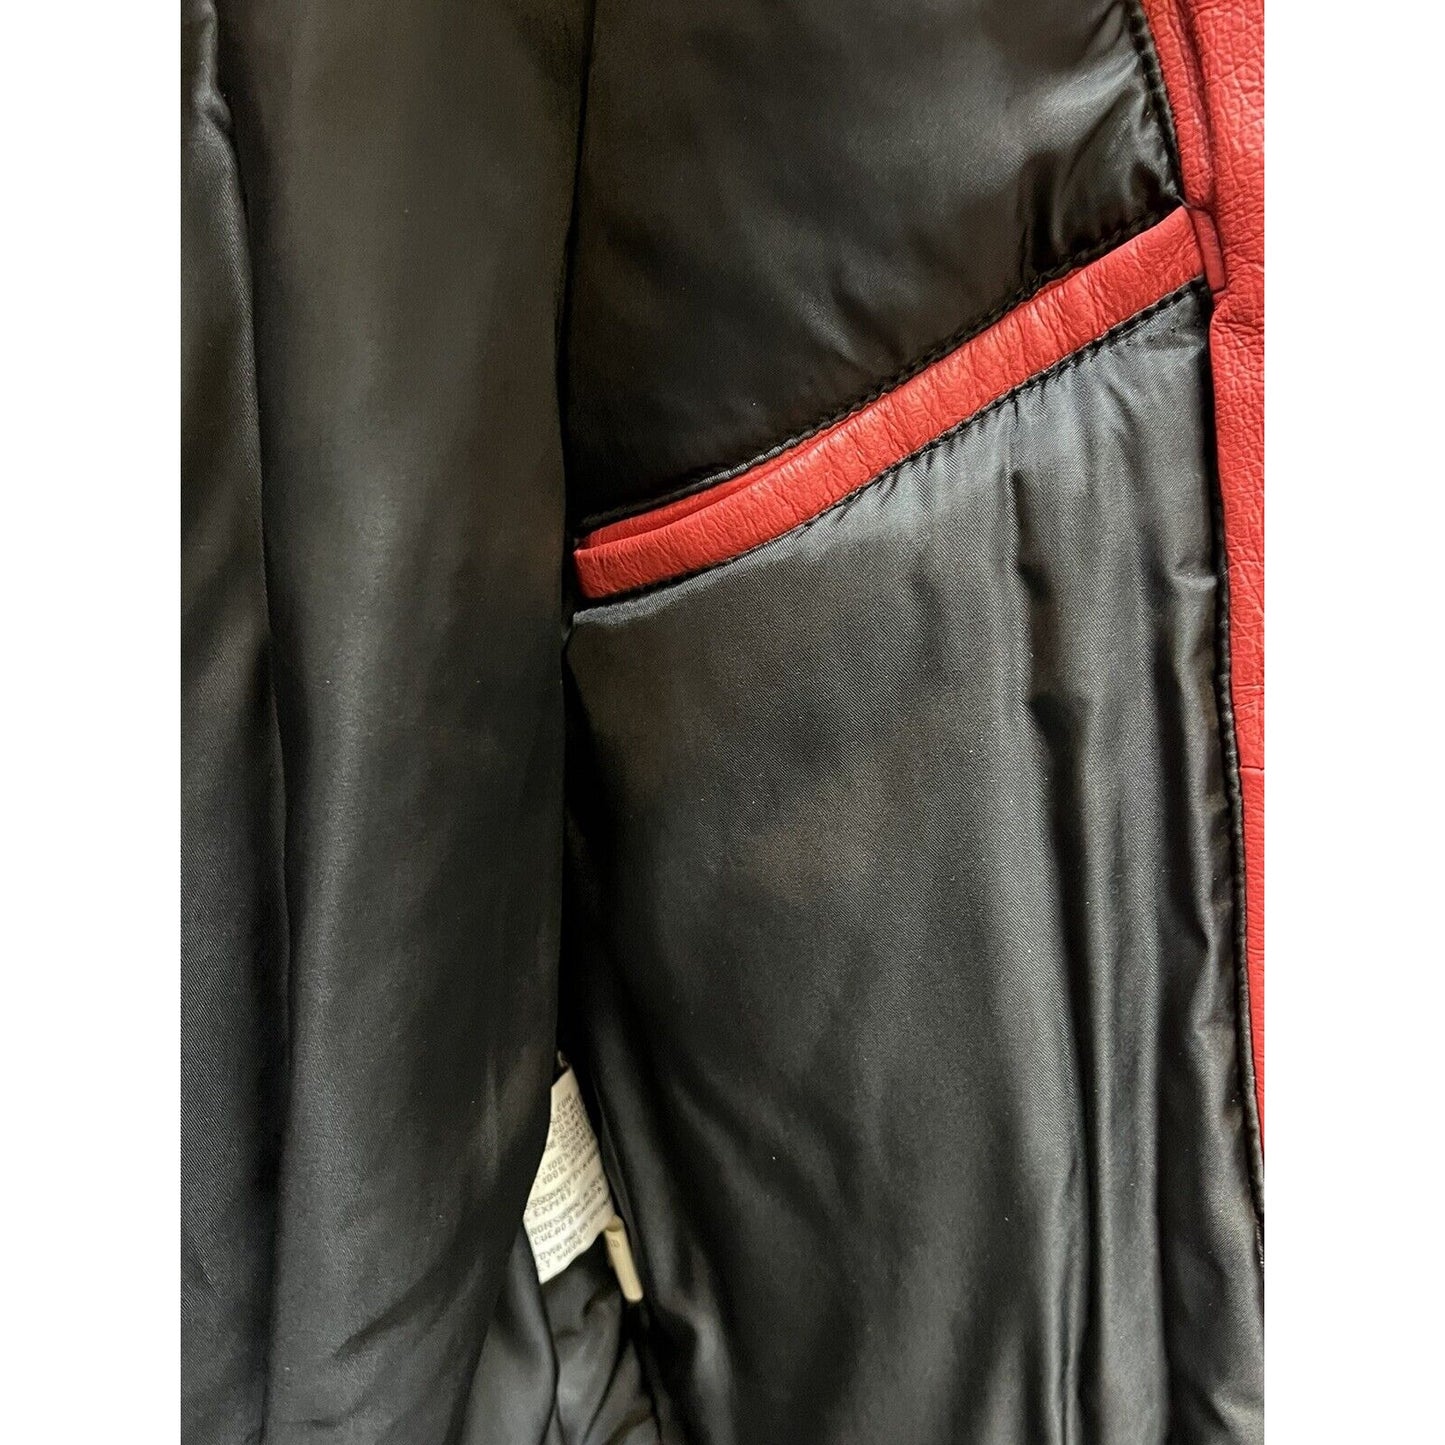 READ - Vintage 90's Jeff Hamilton NBA Chicago Bulls Leather Jacket - Large